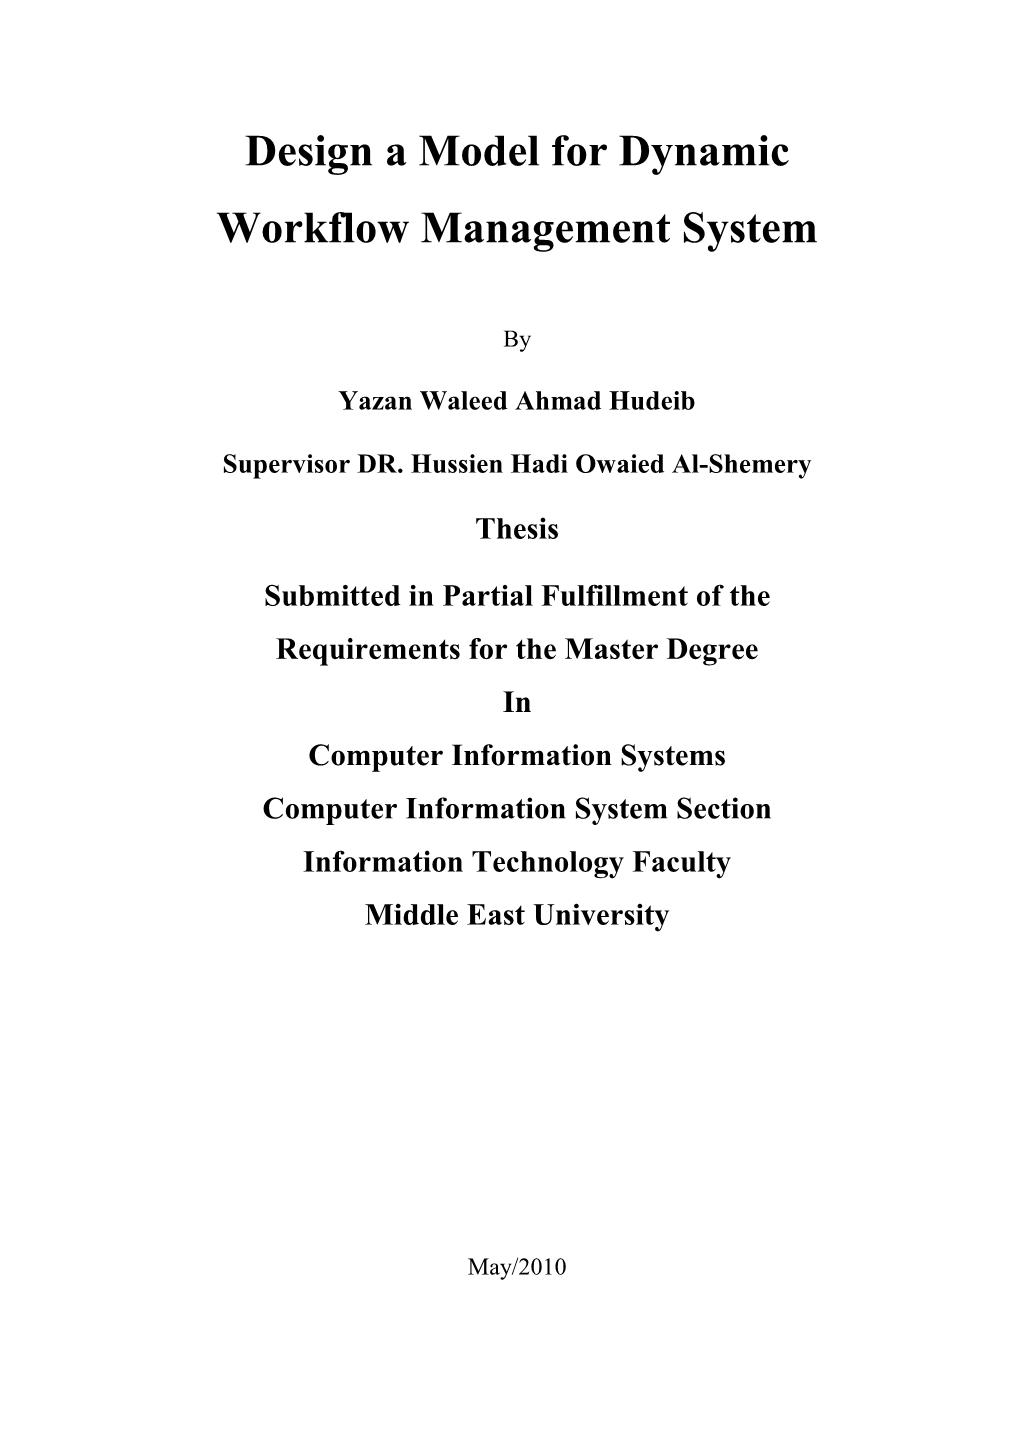 Design a Model for Dynamic Workflow Management System